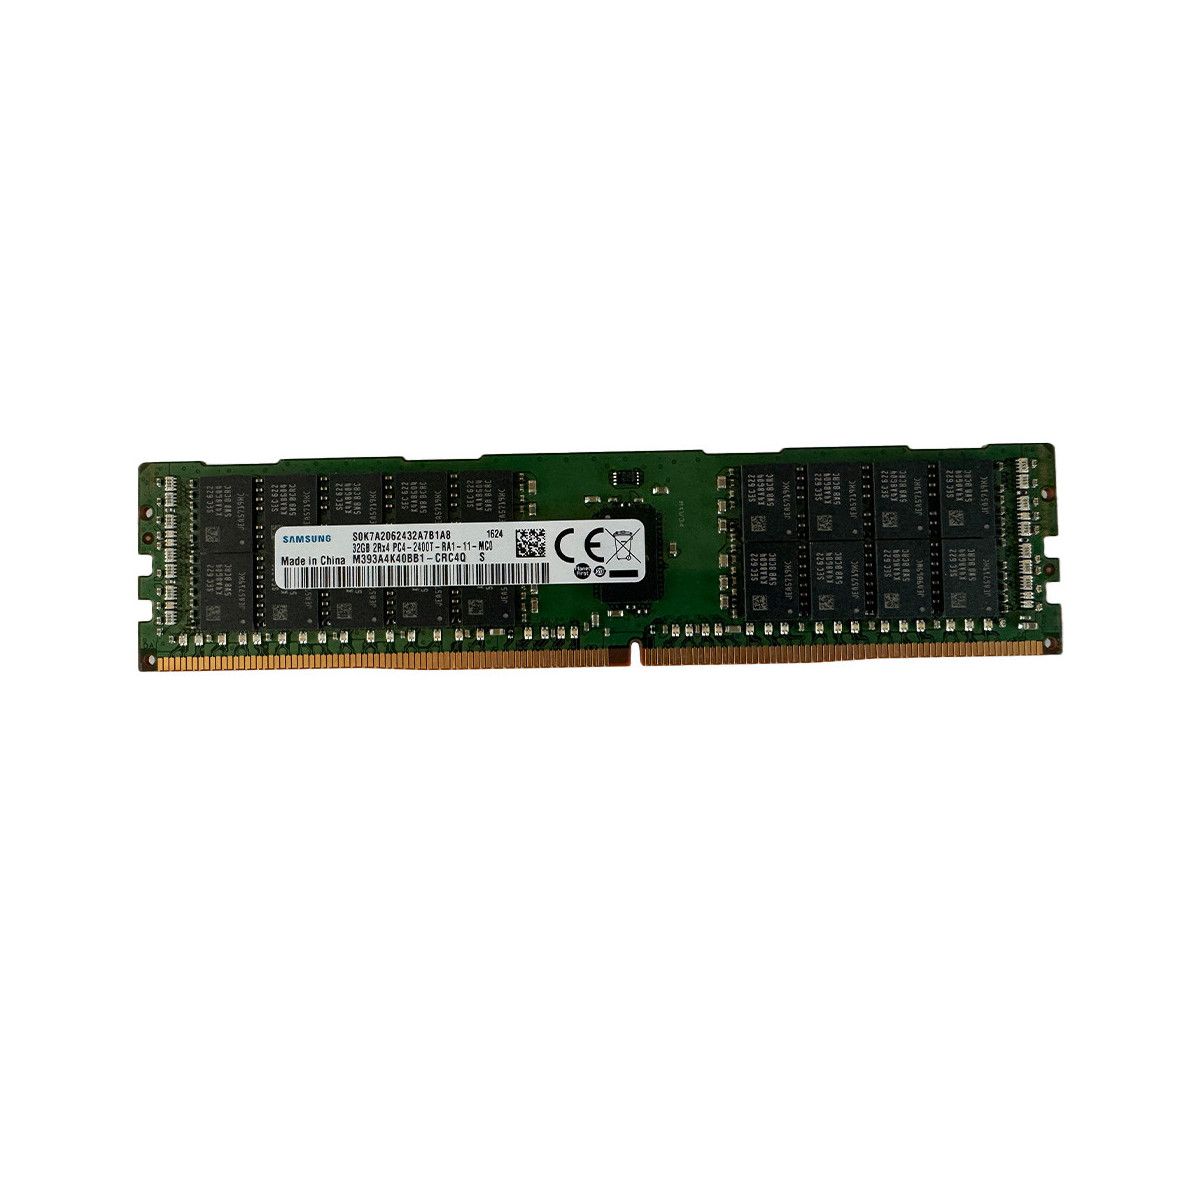 A8711888-MS - Memstar 1x 32GB DDR4-2400 RDIMM PC4-19200T-R - Mem-Star Compatible OEM Memoria 1 - Memstar 